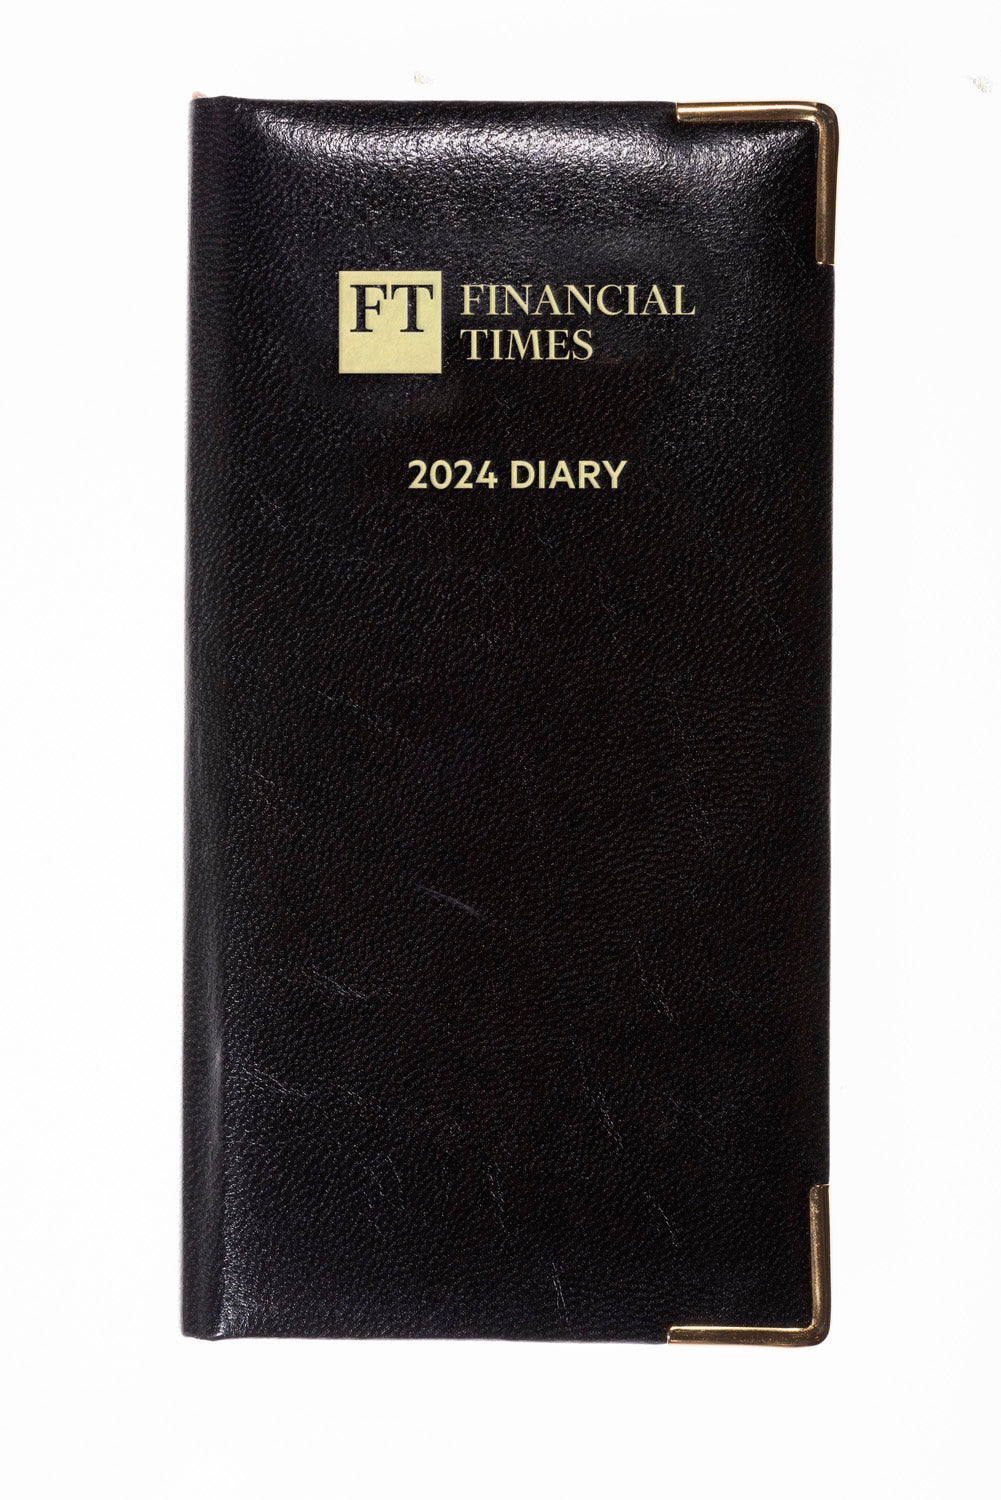 Financial Times - 2024 - Portrait Pocket Diary - Week to View - Black (PC-24)